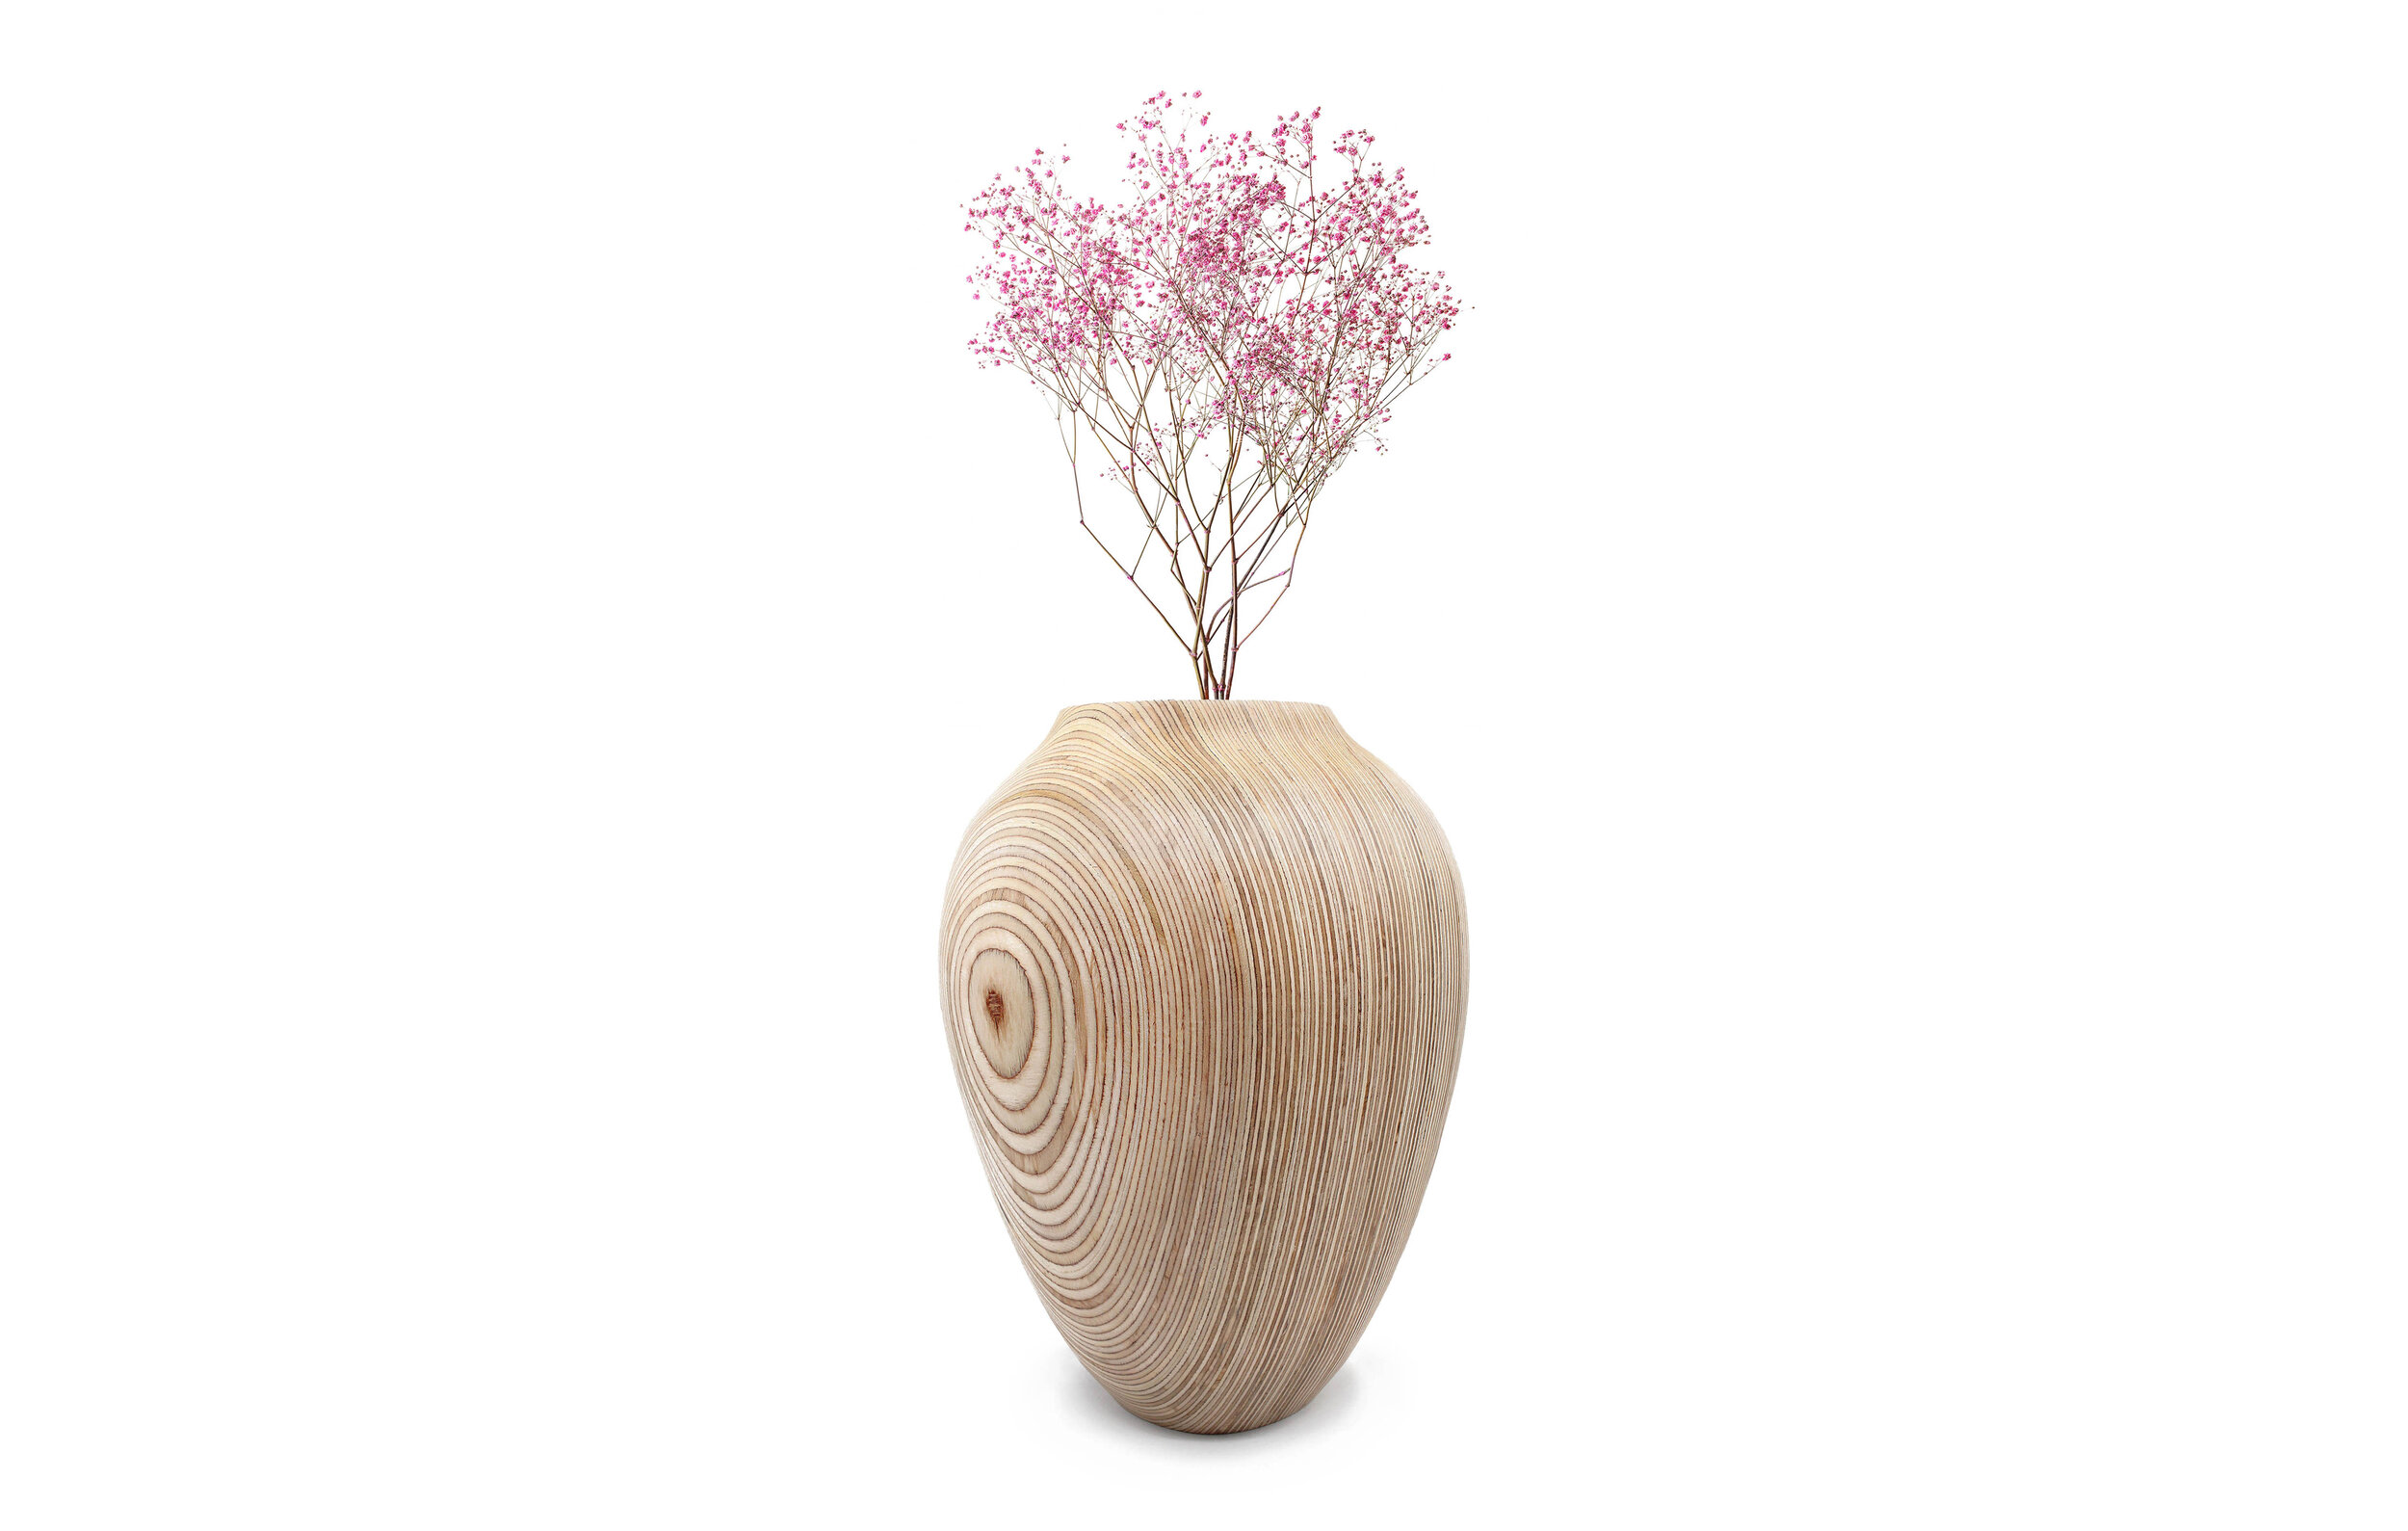 New Vase5 flowers copy.jpg